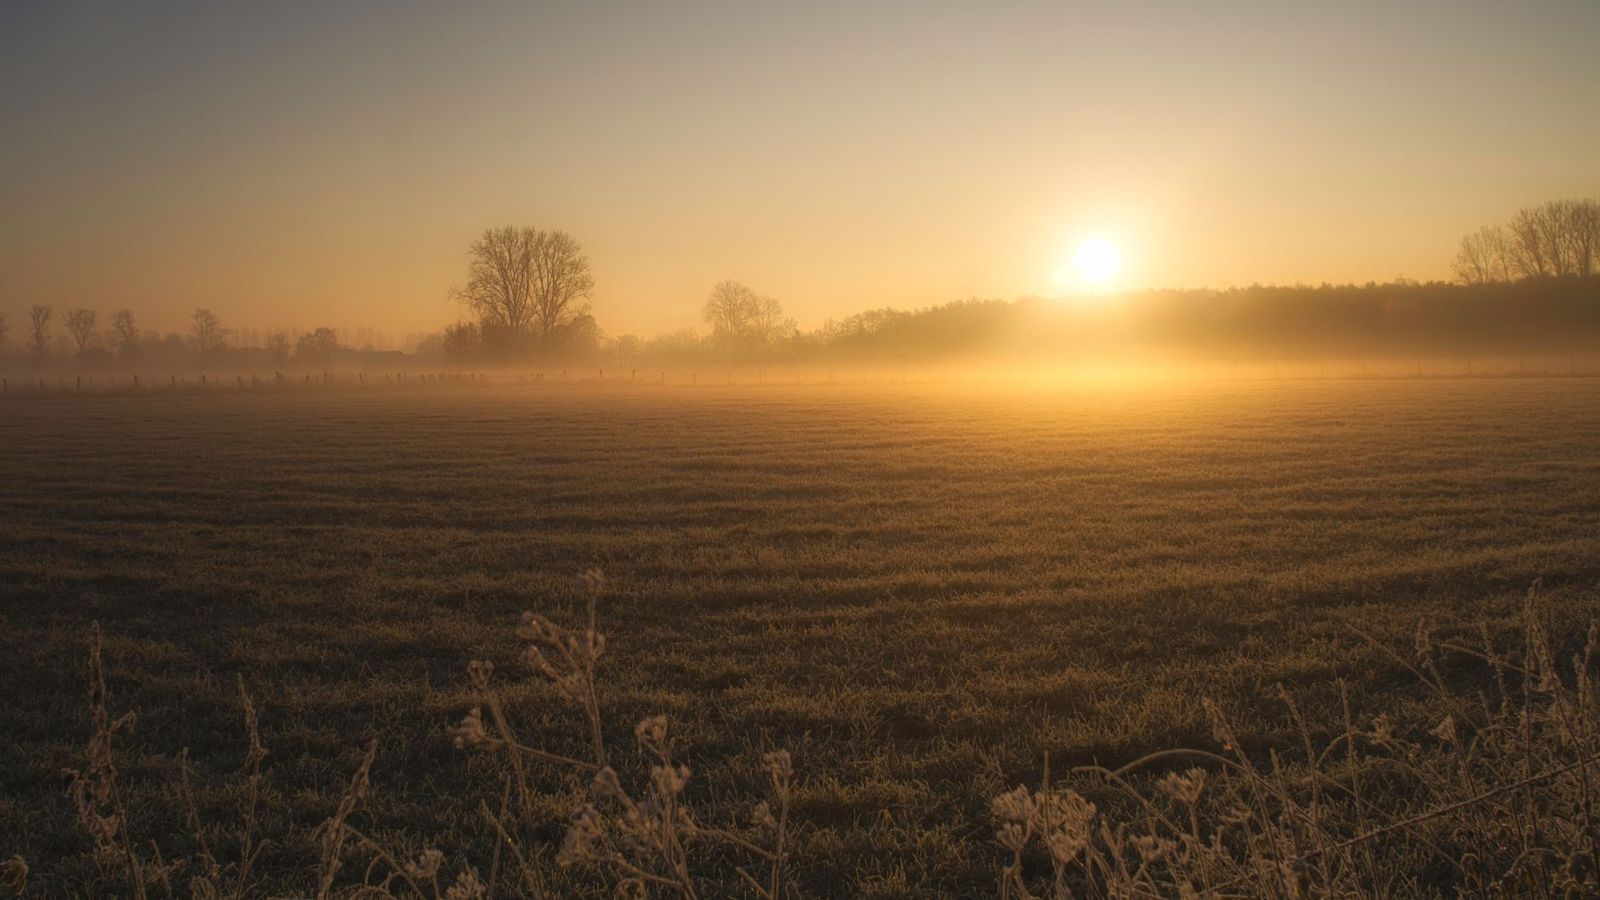 Sunrise in mist photography by Brecht De Ruyte